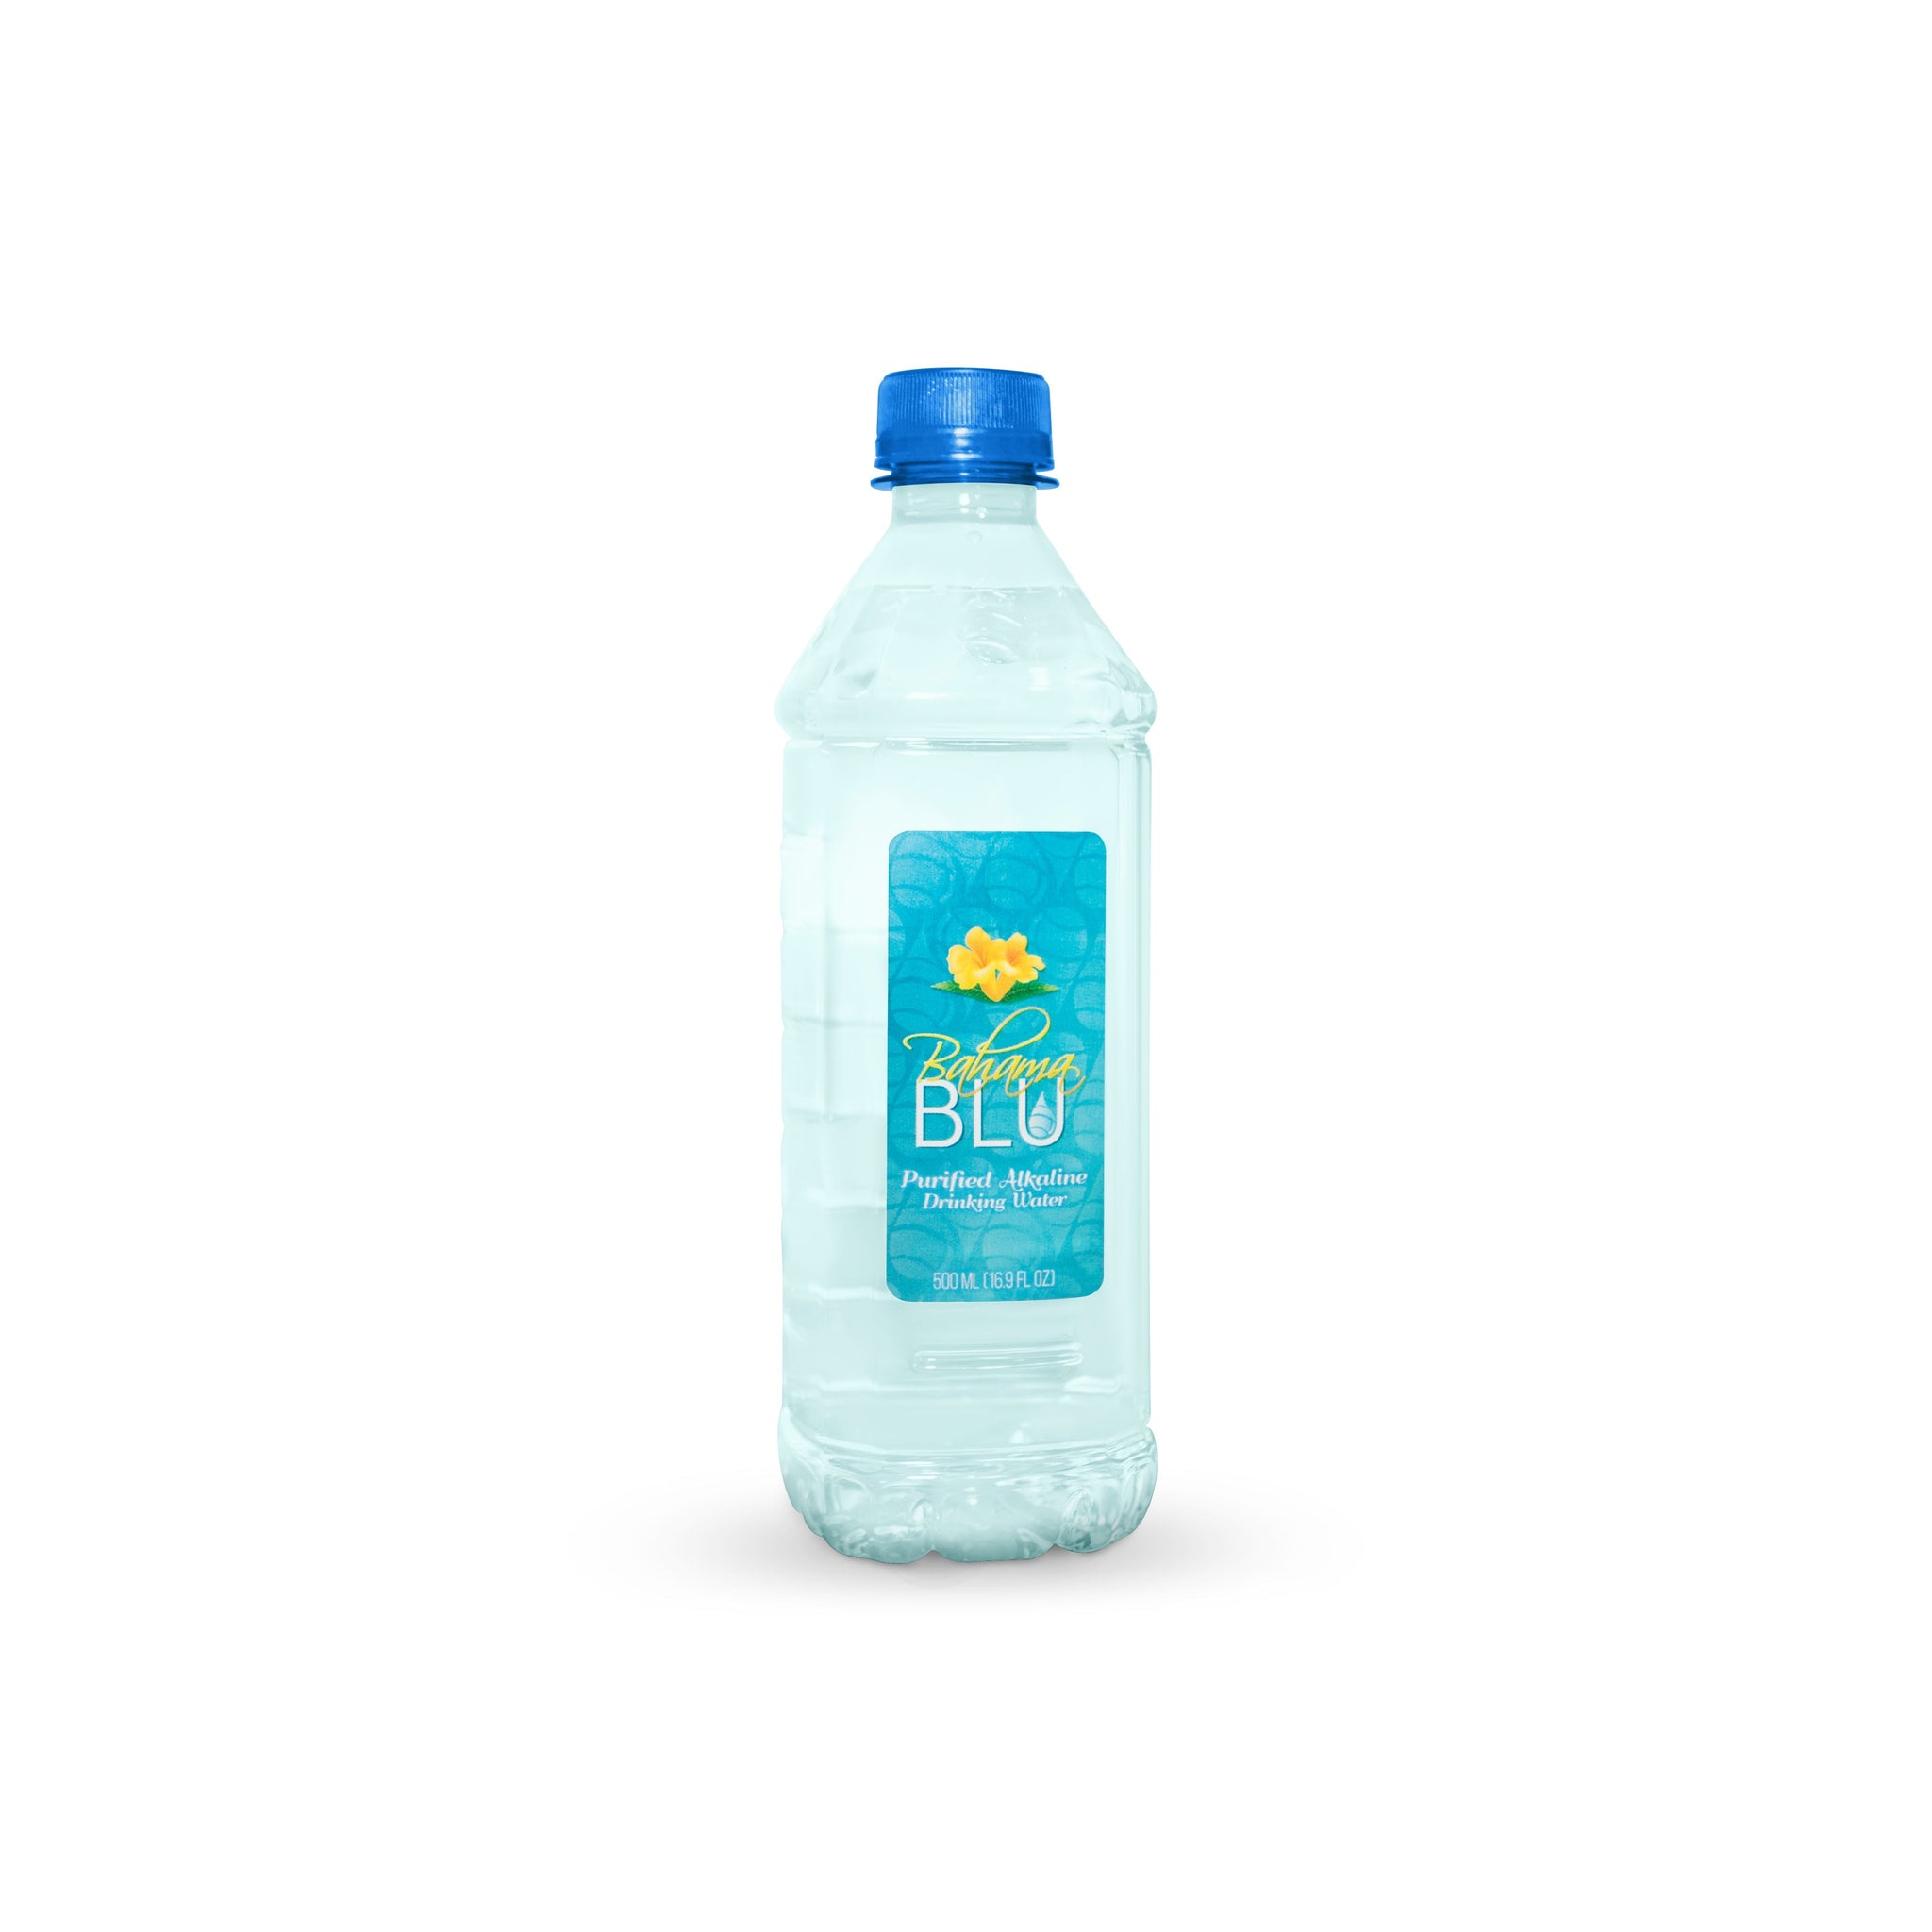 aba>Bahama Blu Water, Alkaline PH8+ 16.9 fl oz (500ml), case 24 count